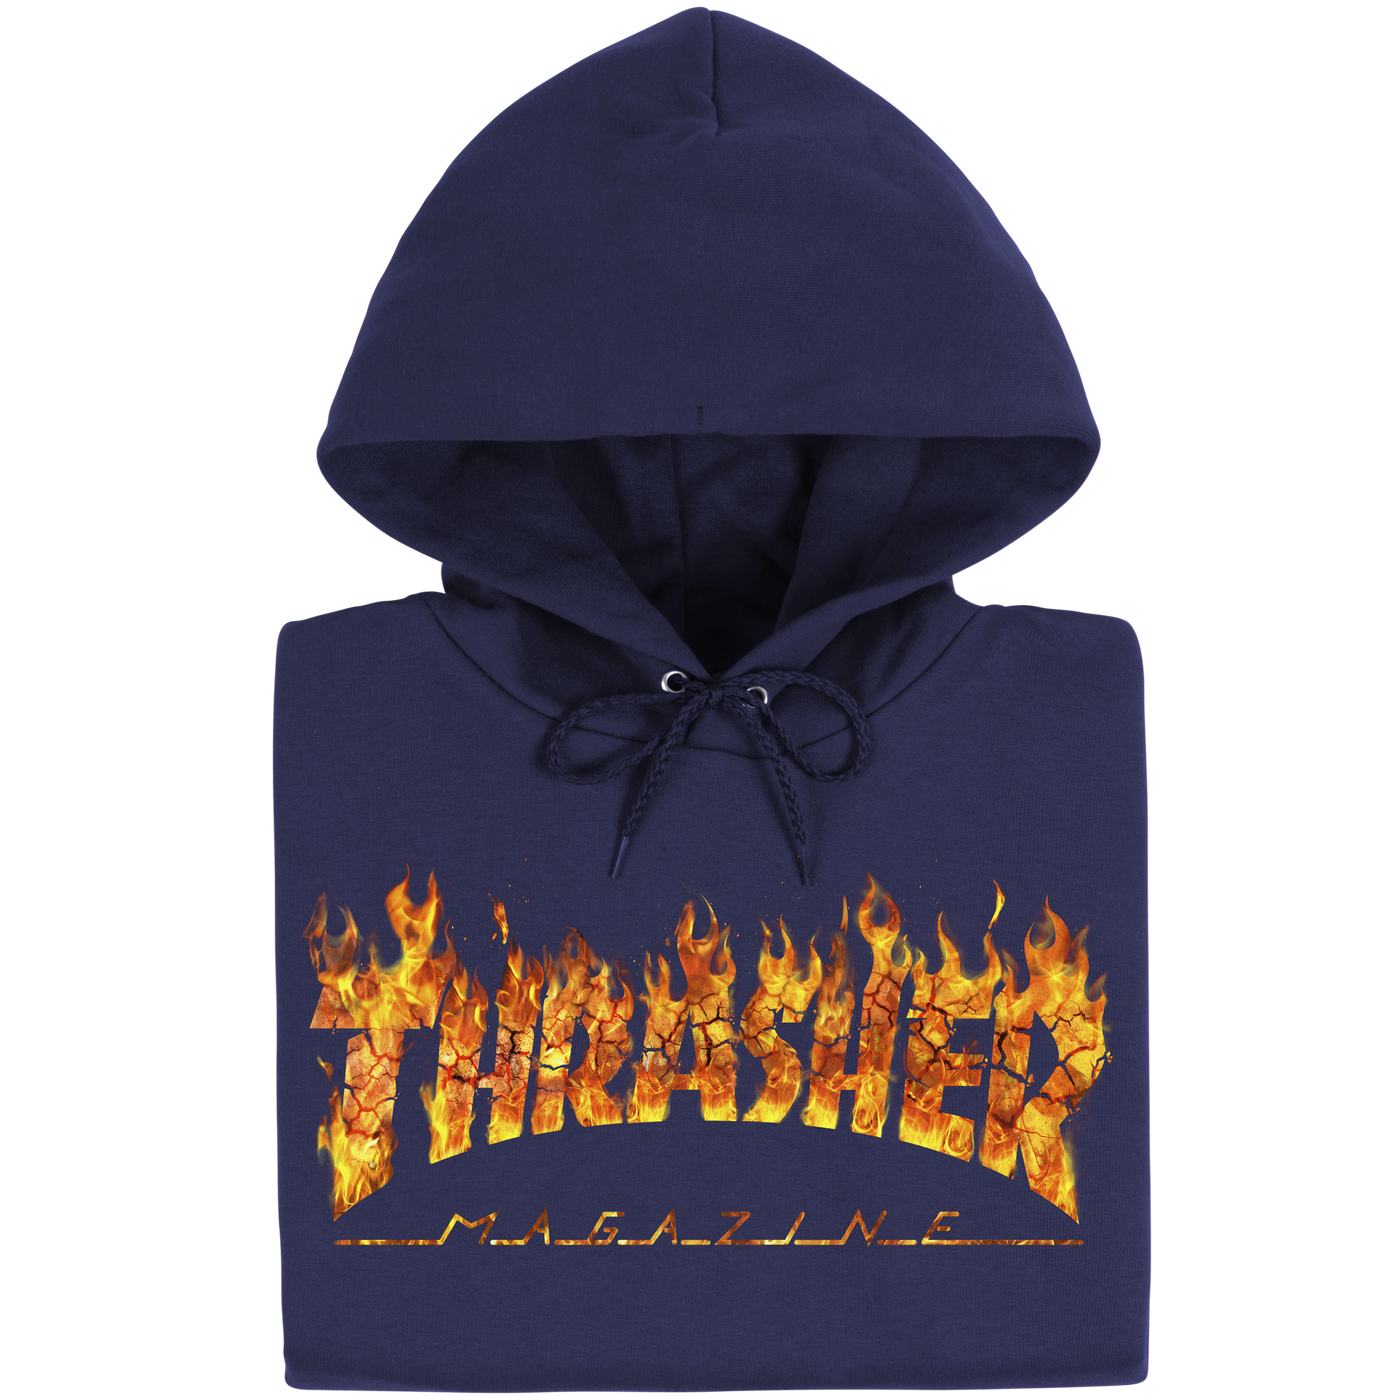 Thrasher - Poleron Canguro Inferno Navy Blue - Lo Mejor De Thrasher - Solo Por $59990! Compra Ahora En Wallride Skateshop